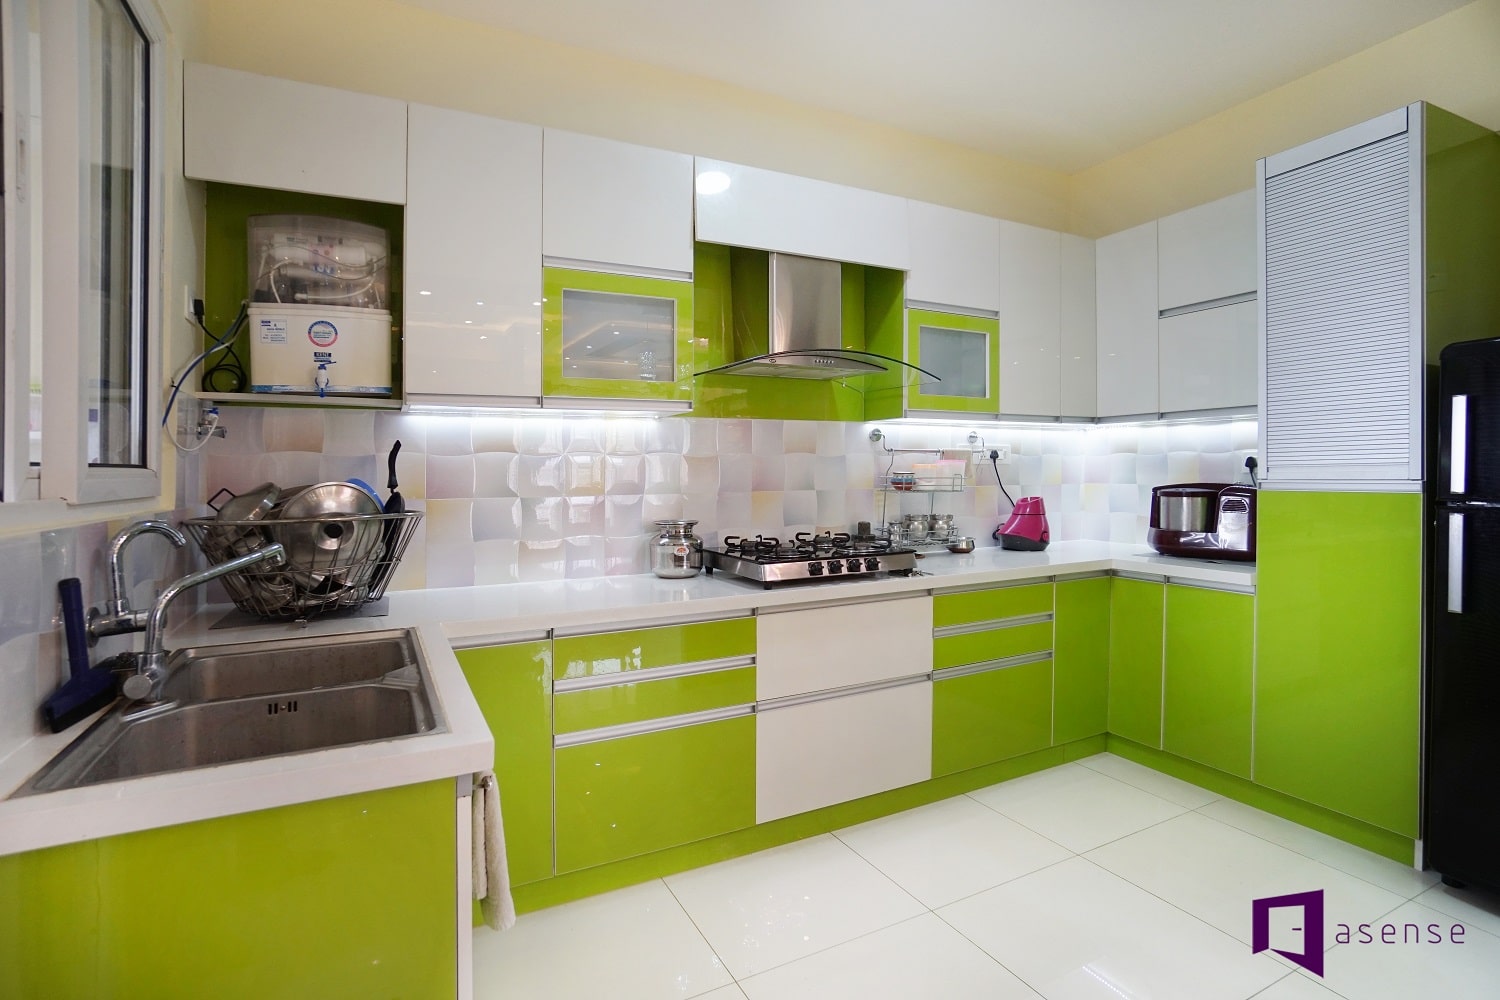 Asense   20 Trendy Modular Kitchen Designs Ideas for Small Kitchens